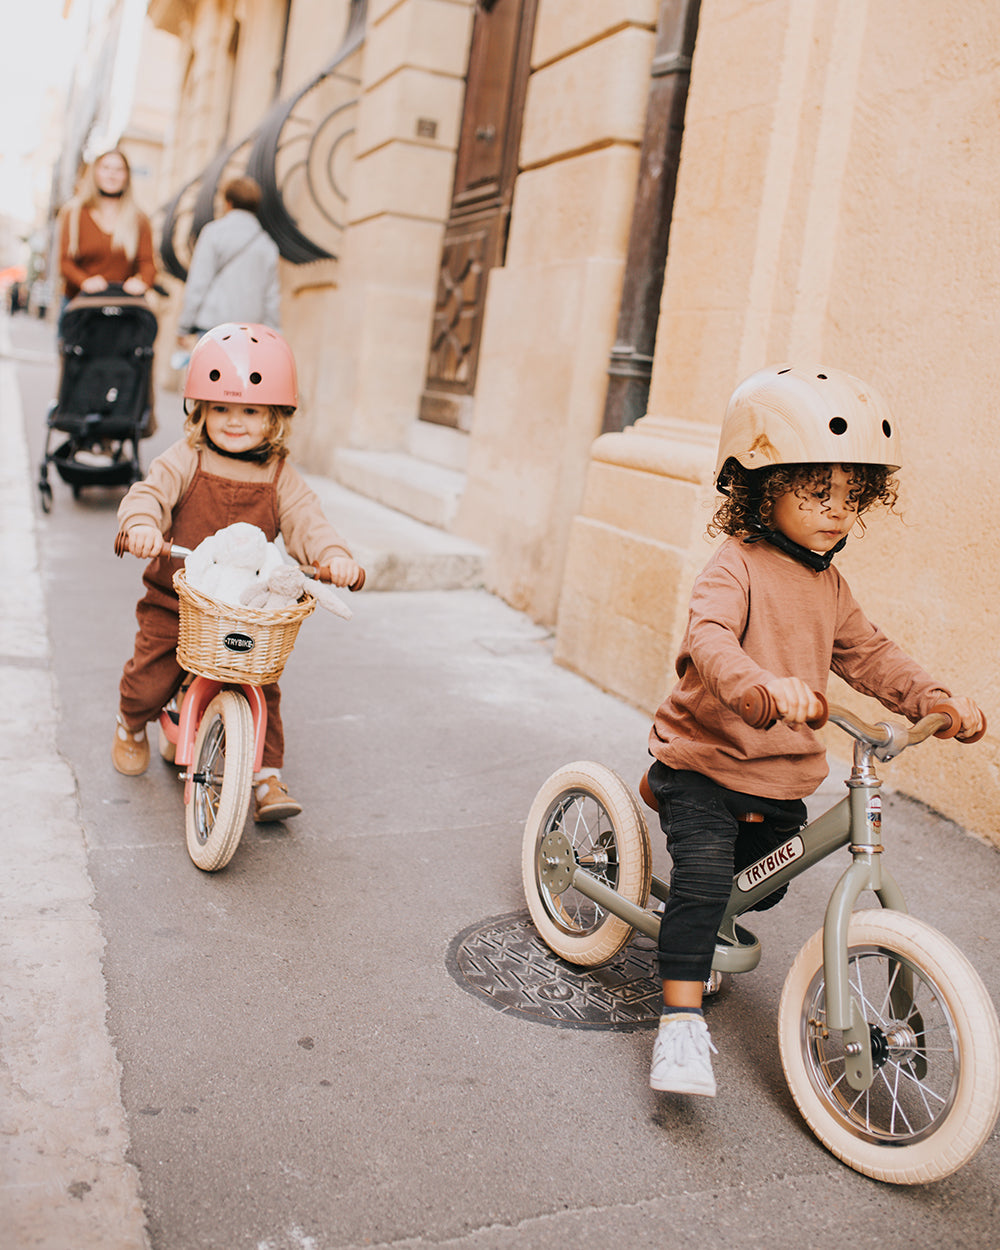 Trybike - Dreirad für Kinder STEEL - vintage colors